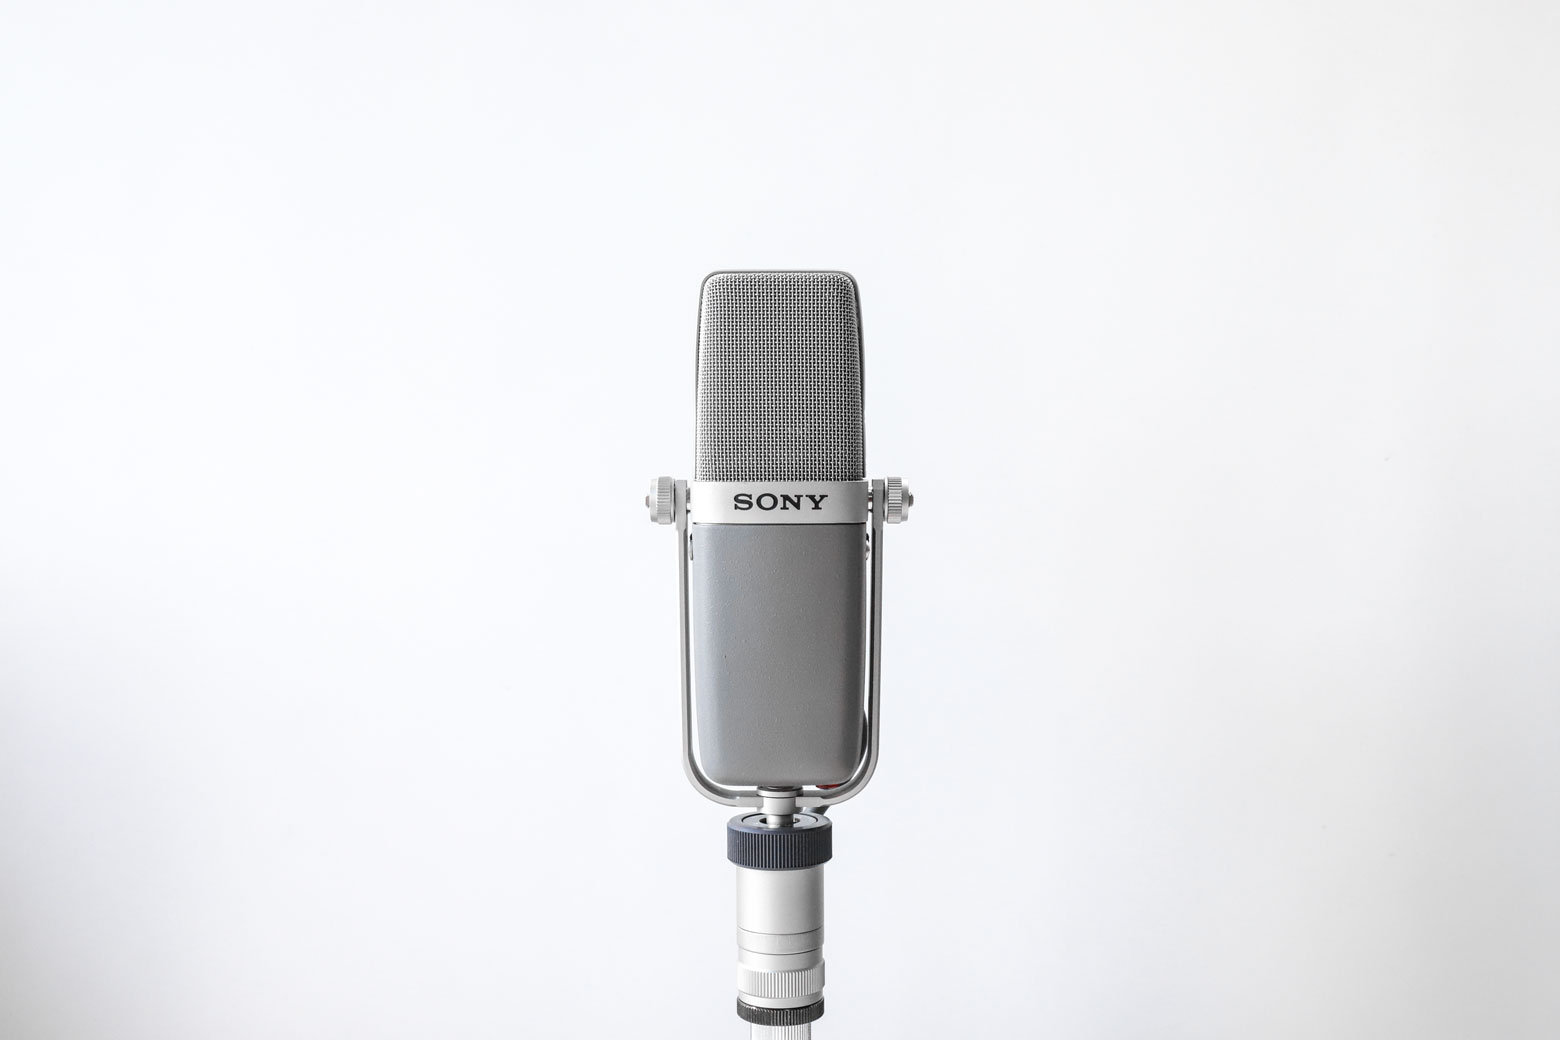 SONY Condenser Microphone C-38B/ソニー コンデンサー マイクロフォン